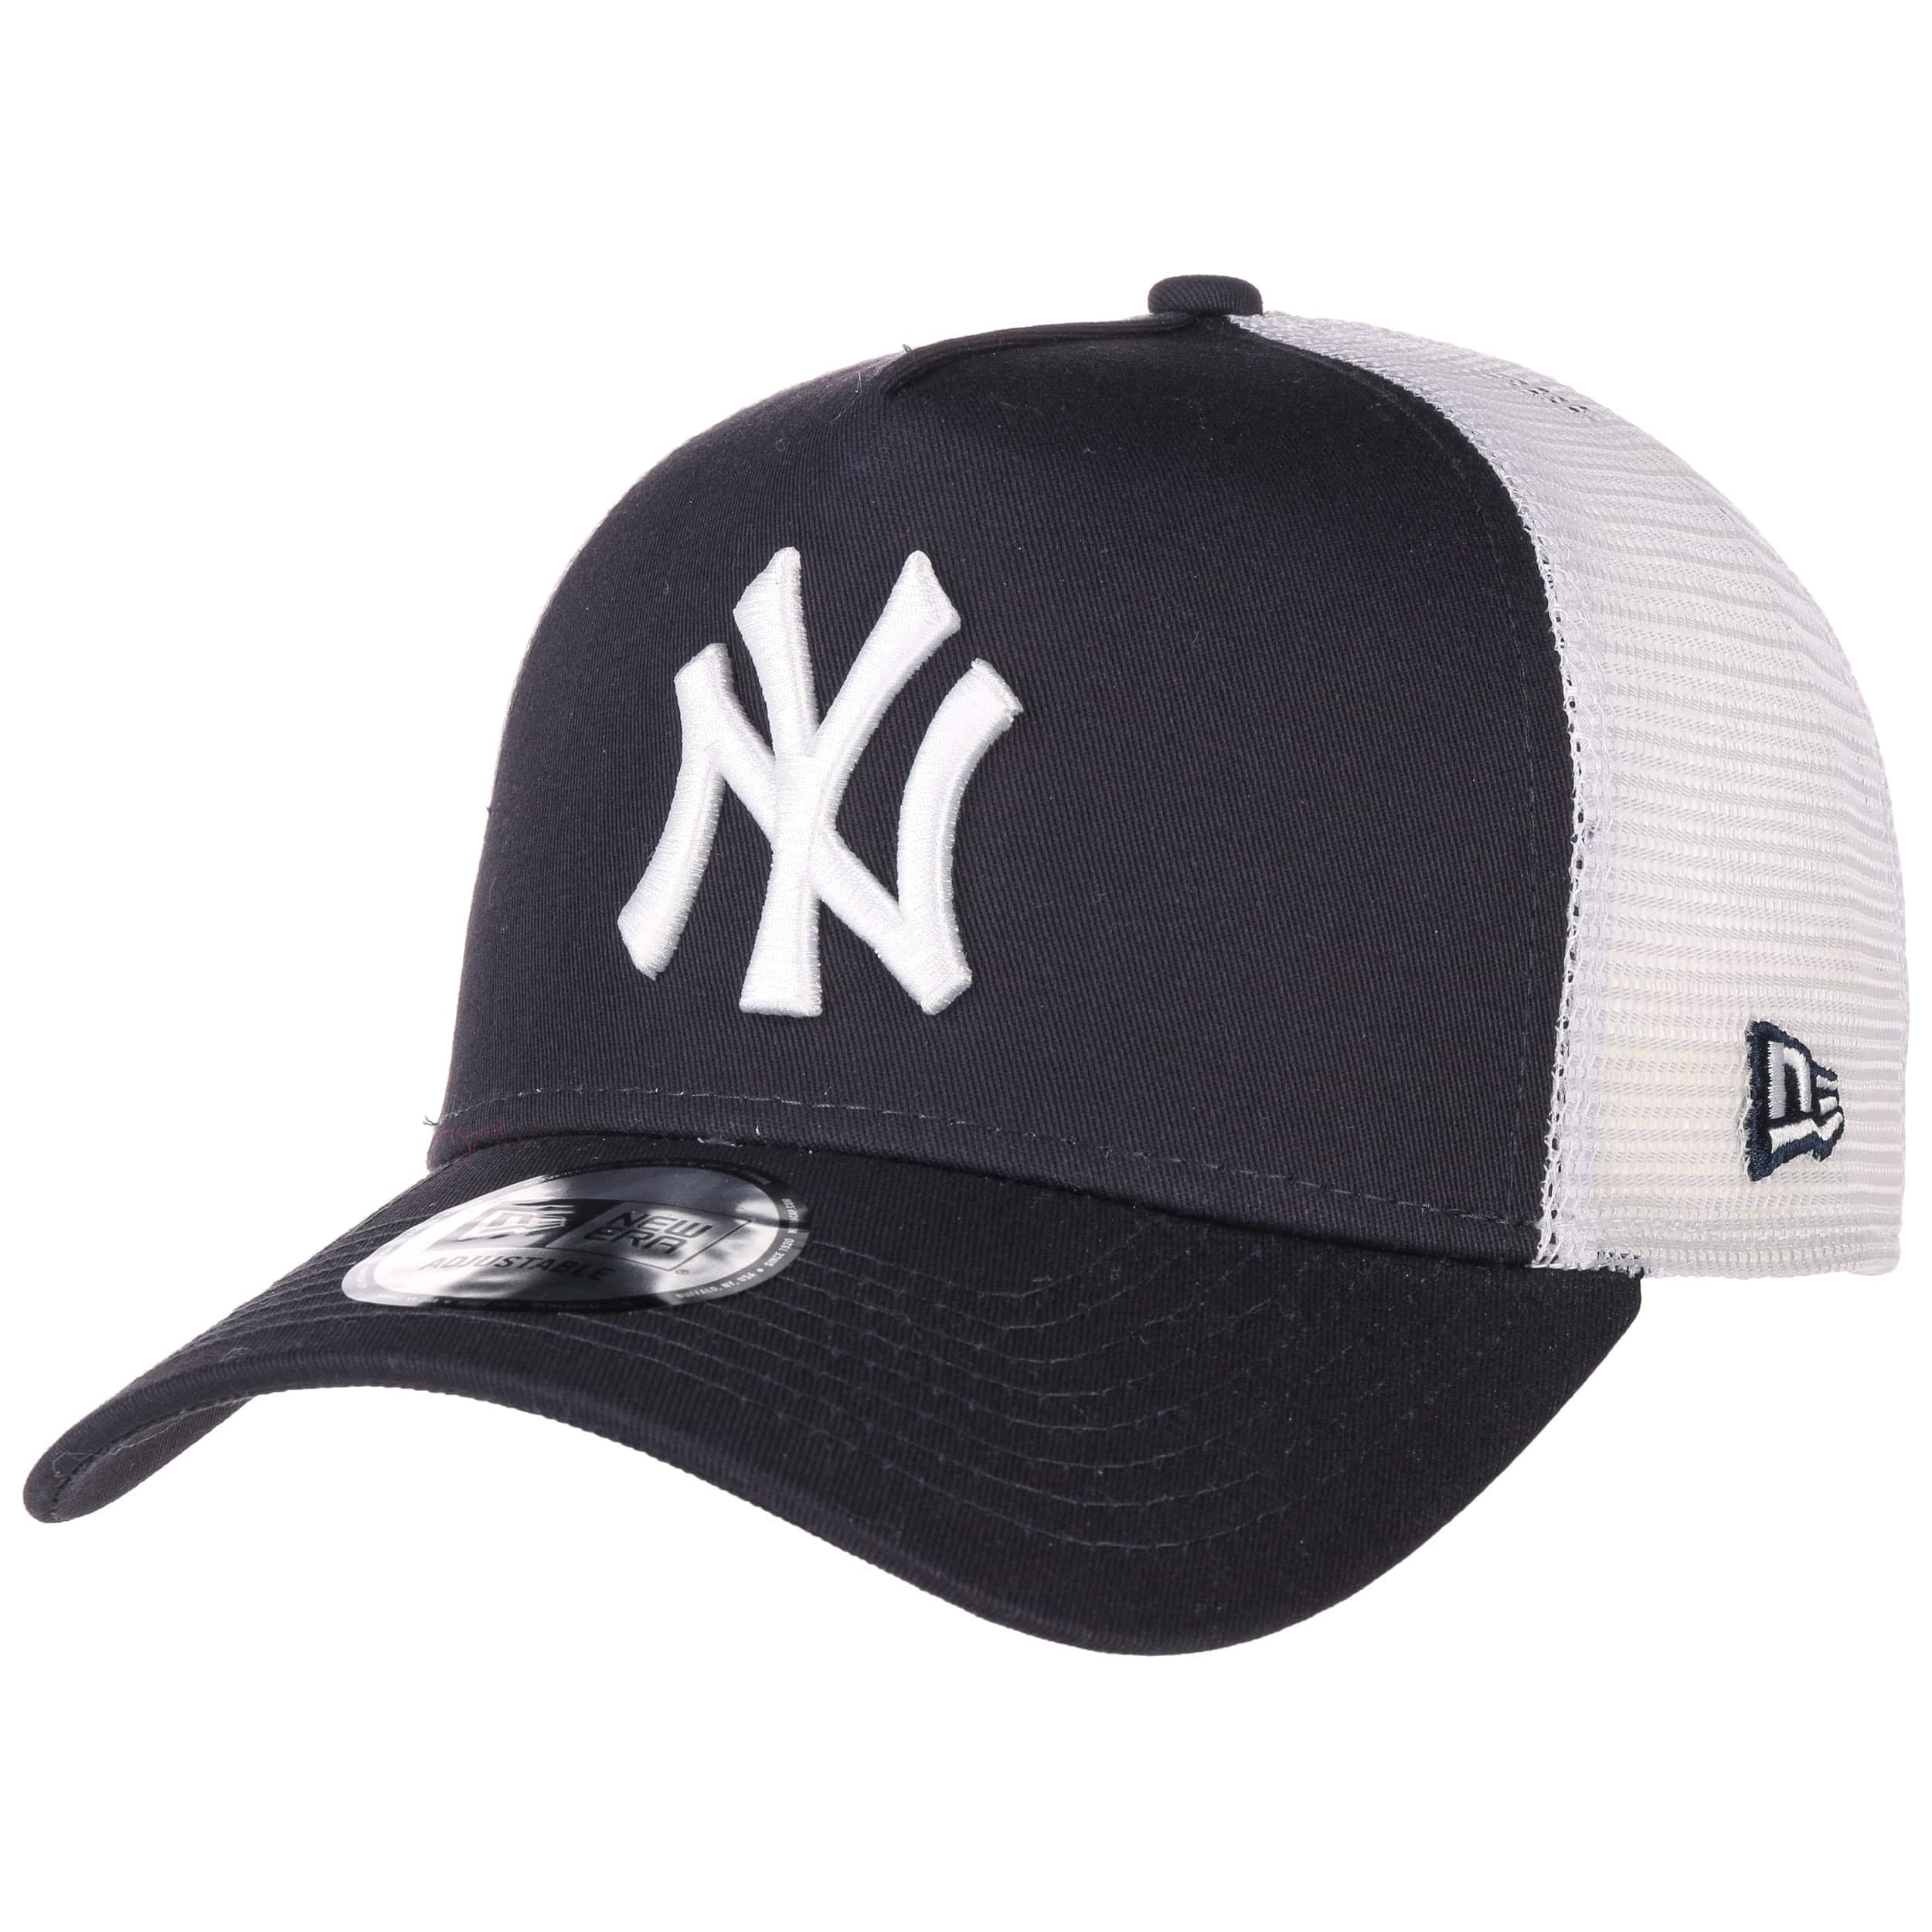 Clean Twotone Yankees Trucker Cap New € 37,95 Era - by